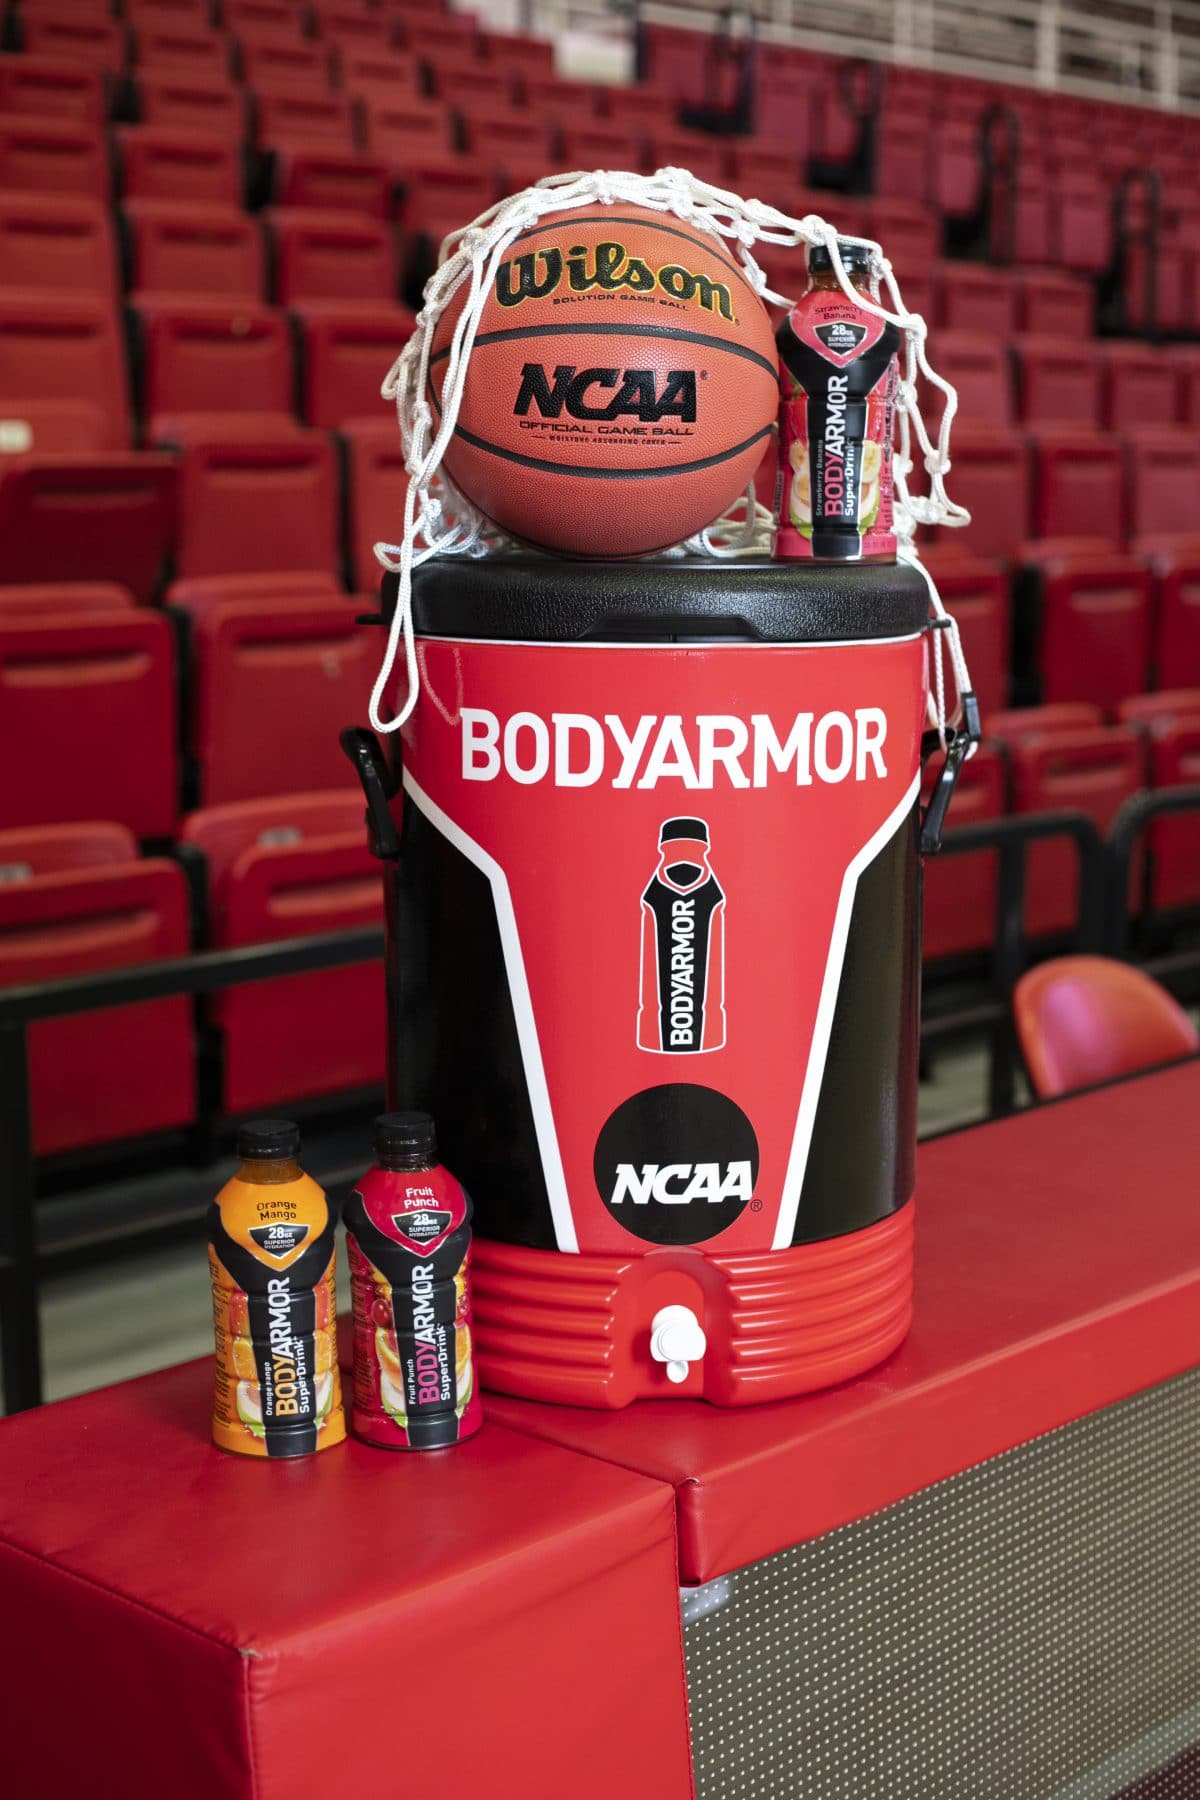 BodyArmor drink, branding replacing Powerade at NCAA championships